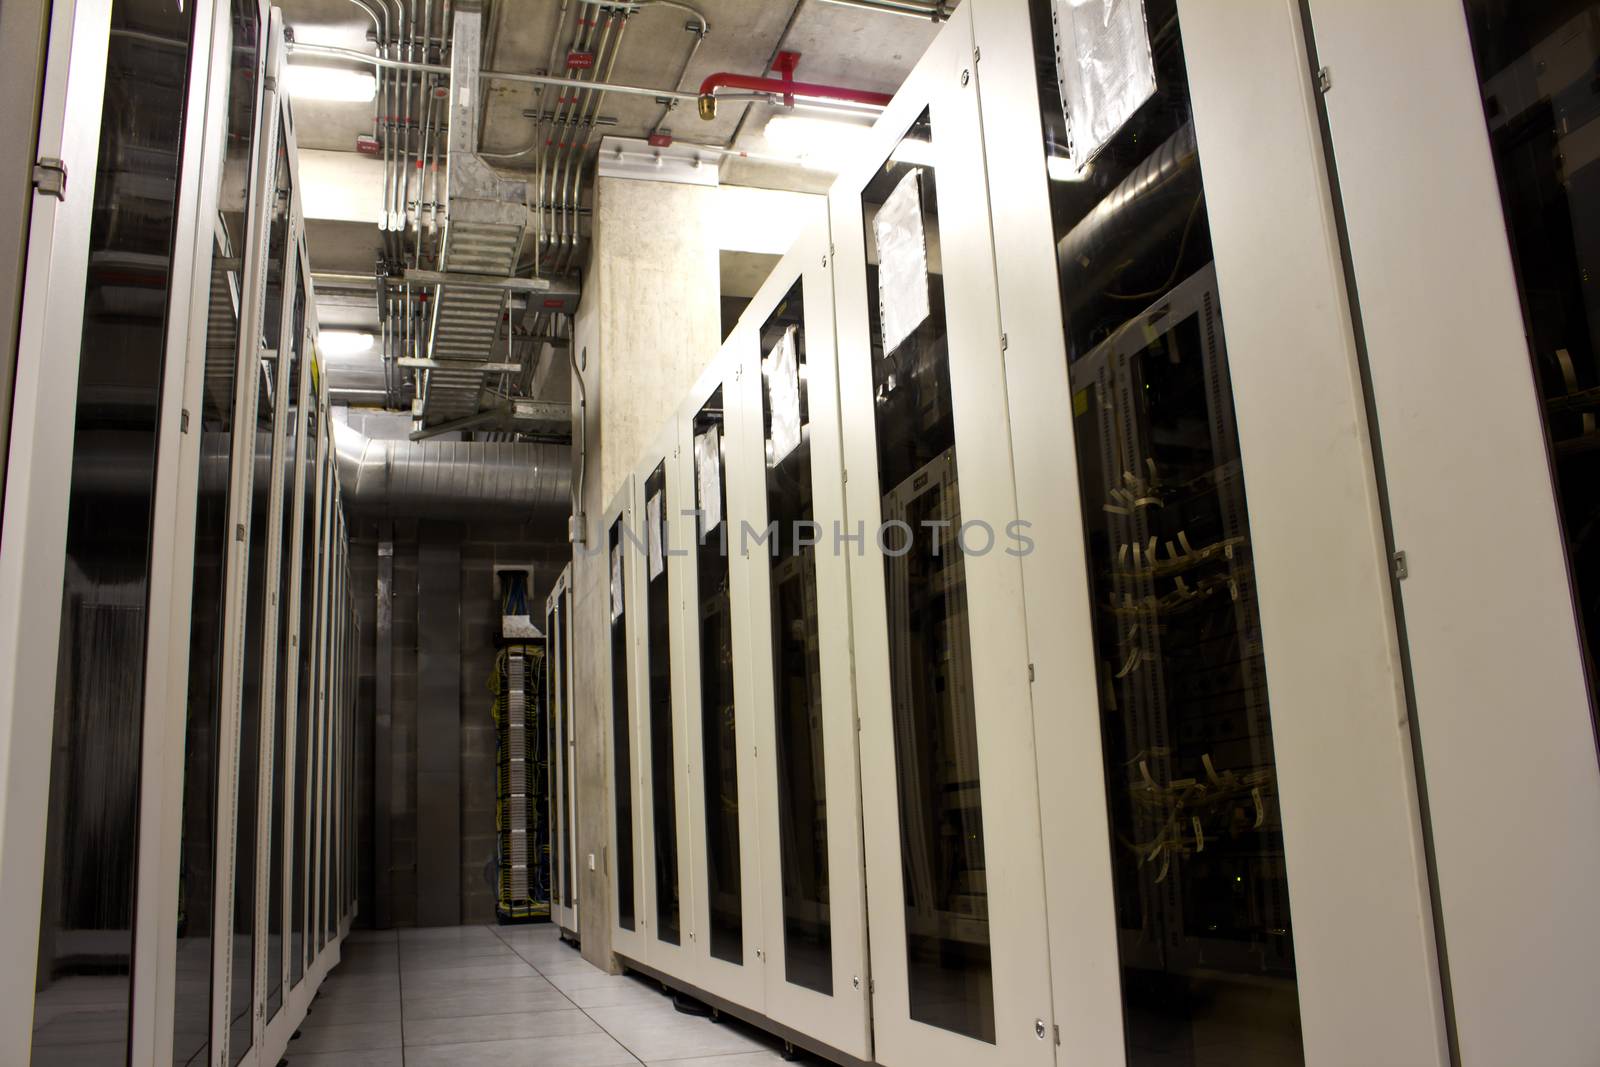 network server system cabinet in building